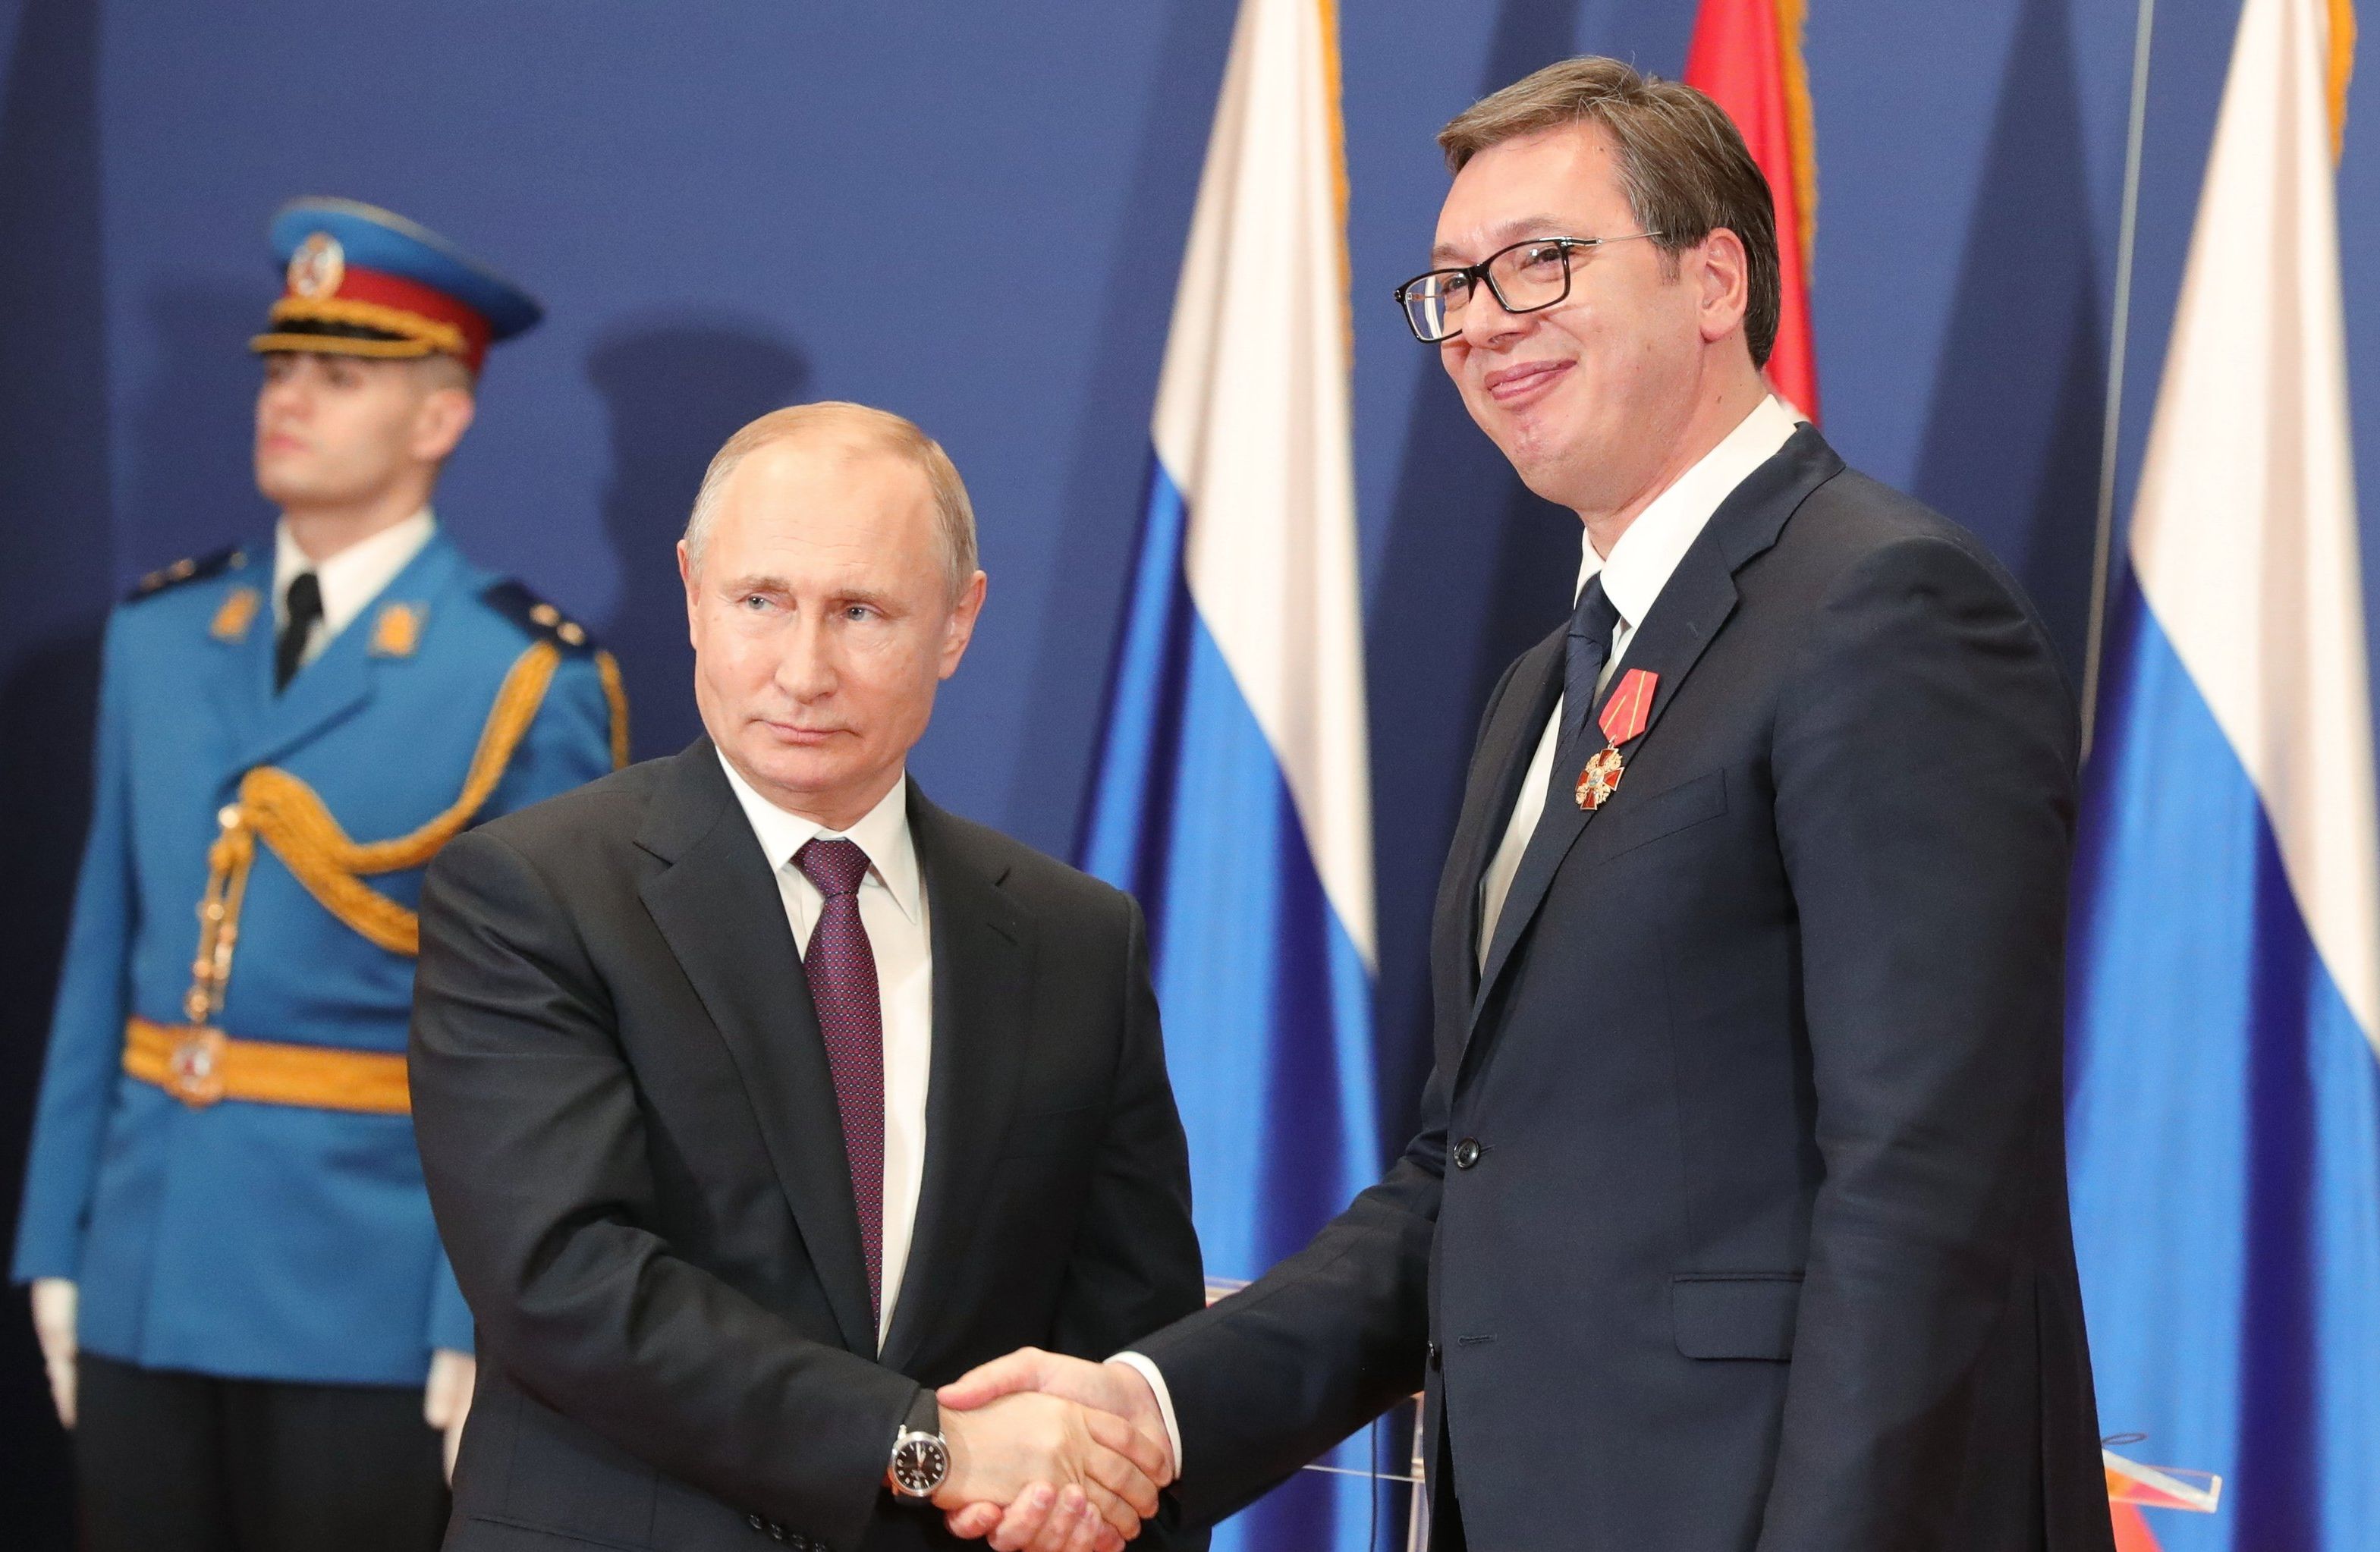 ОфиПрезидент РФ Владимир Путин (слева) и президент Республики Сербии Александр Вучич(справа), 17 января 2019